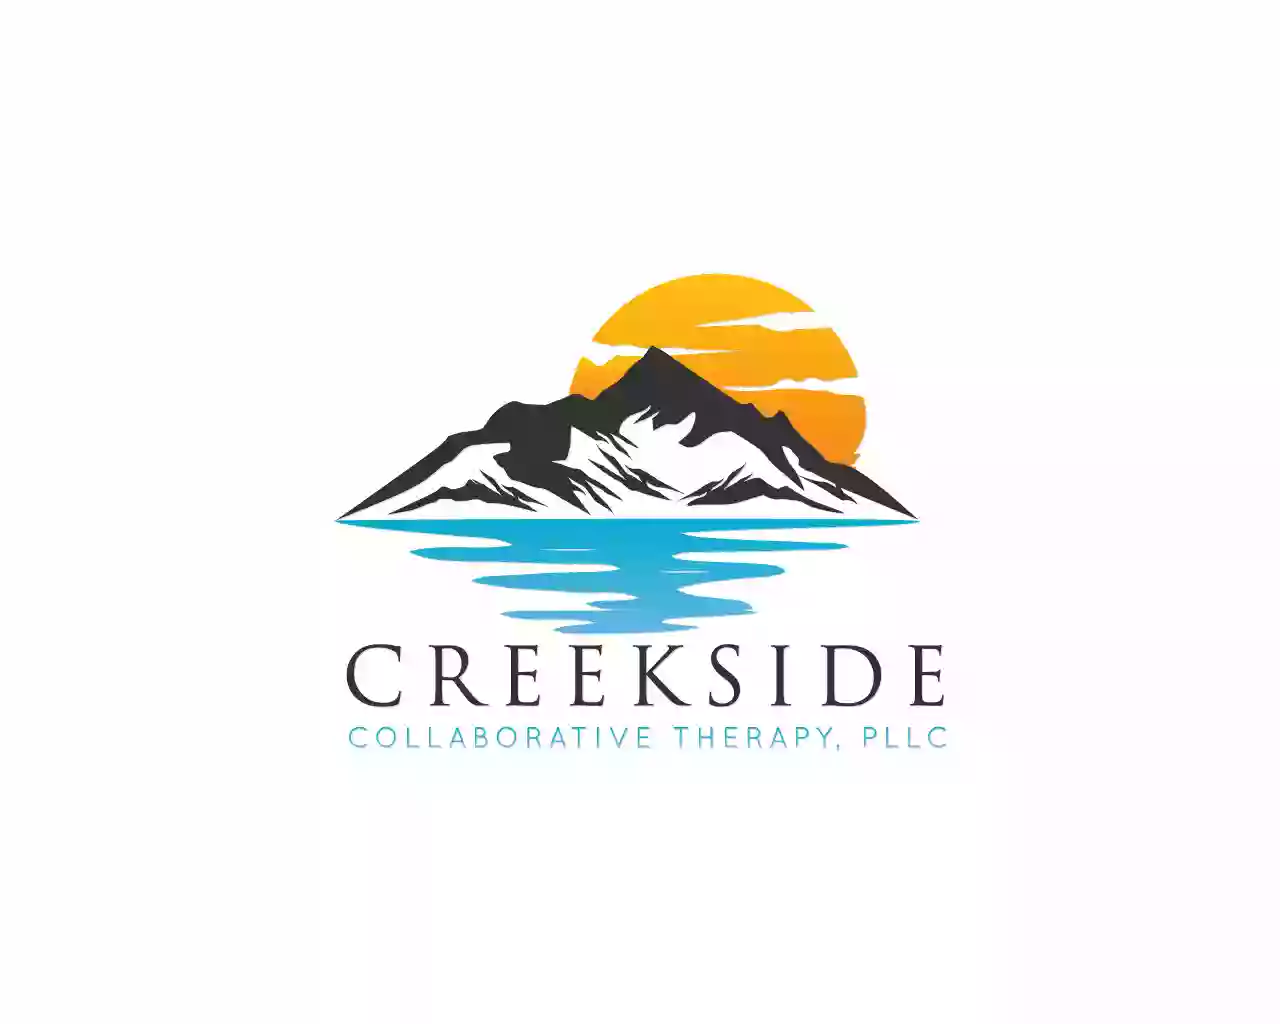 Creekside Collaborative Therapy